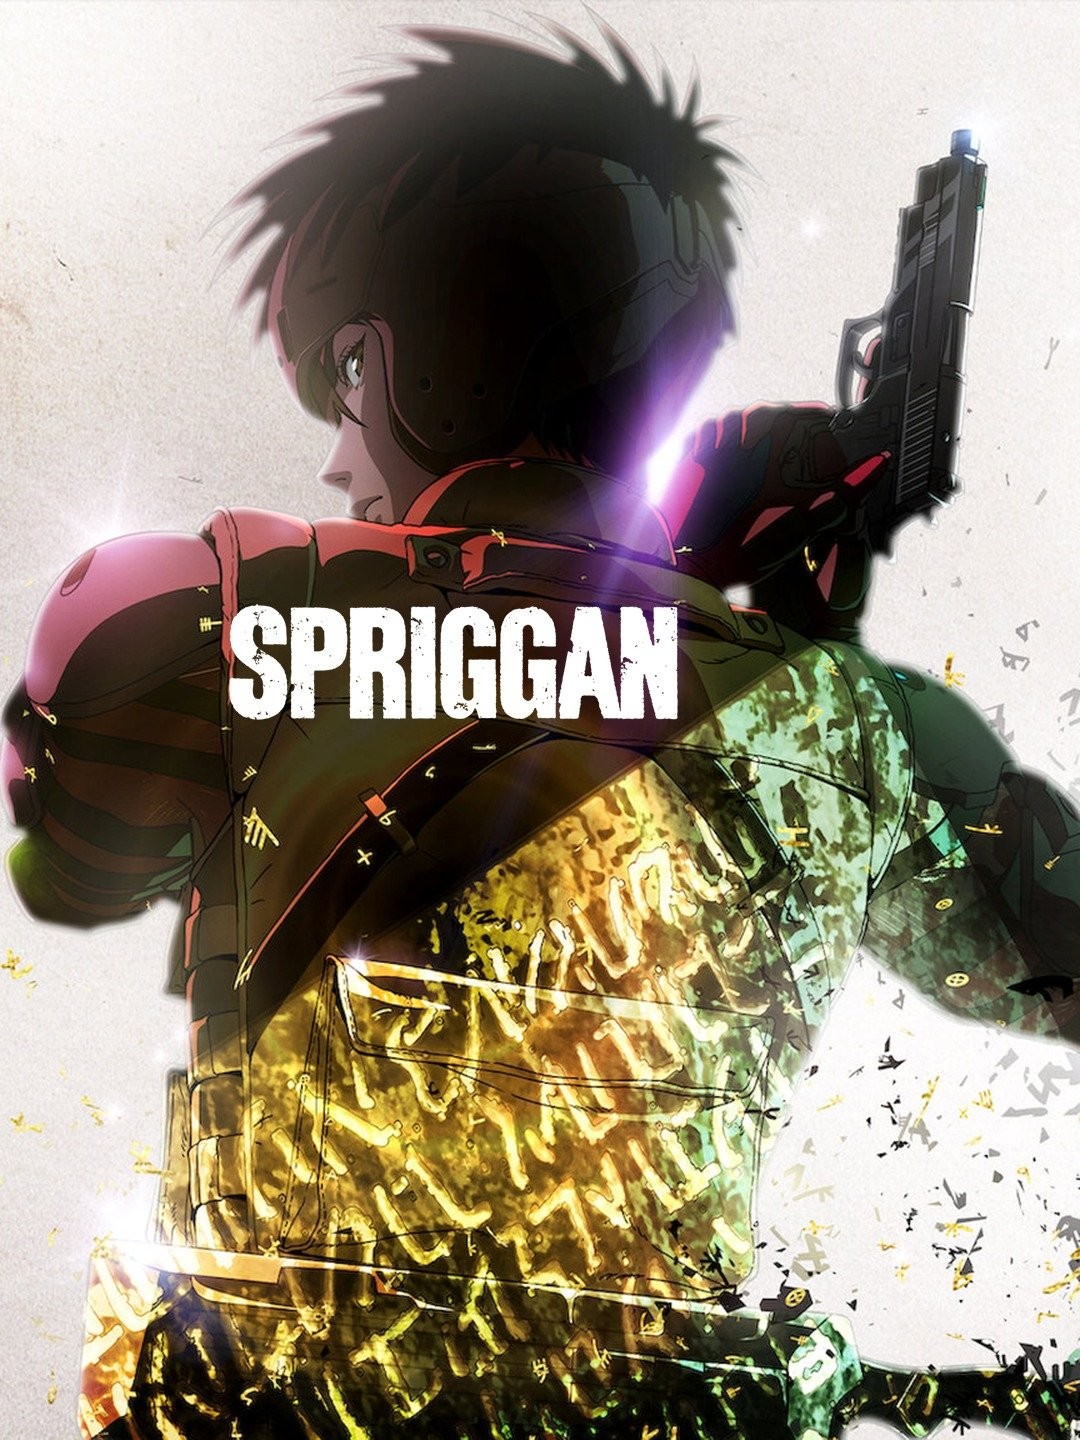 Spriggan' Is Getting An Anime Adaptation - Fossbytes